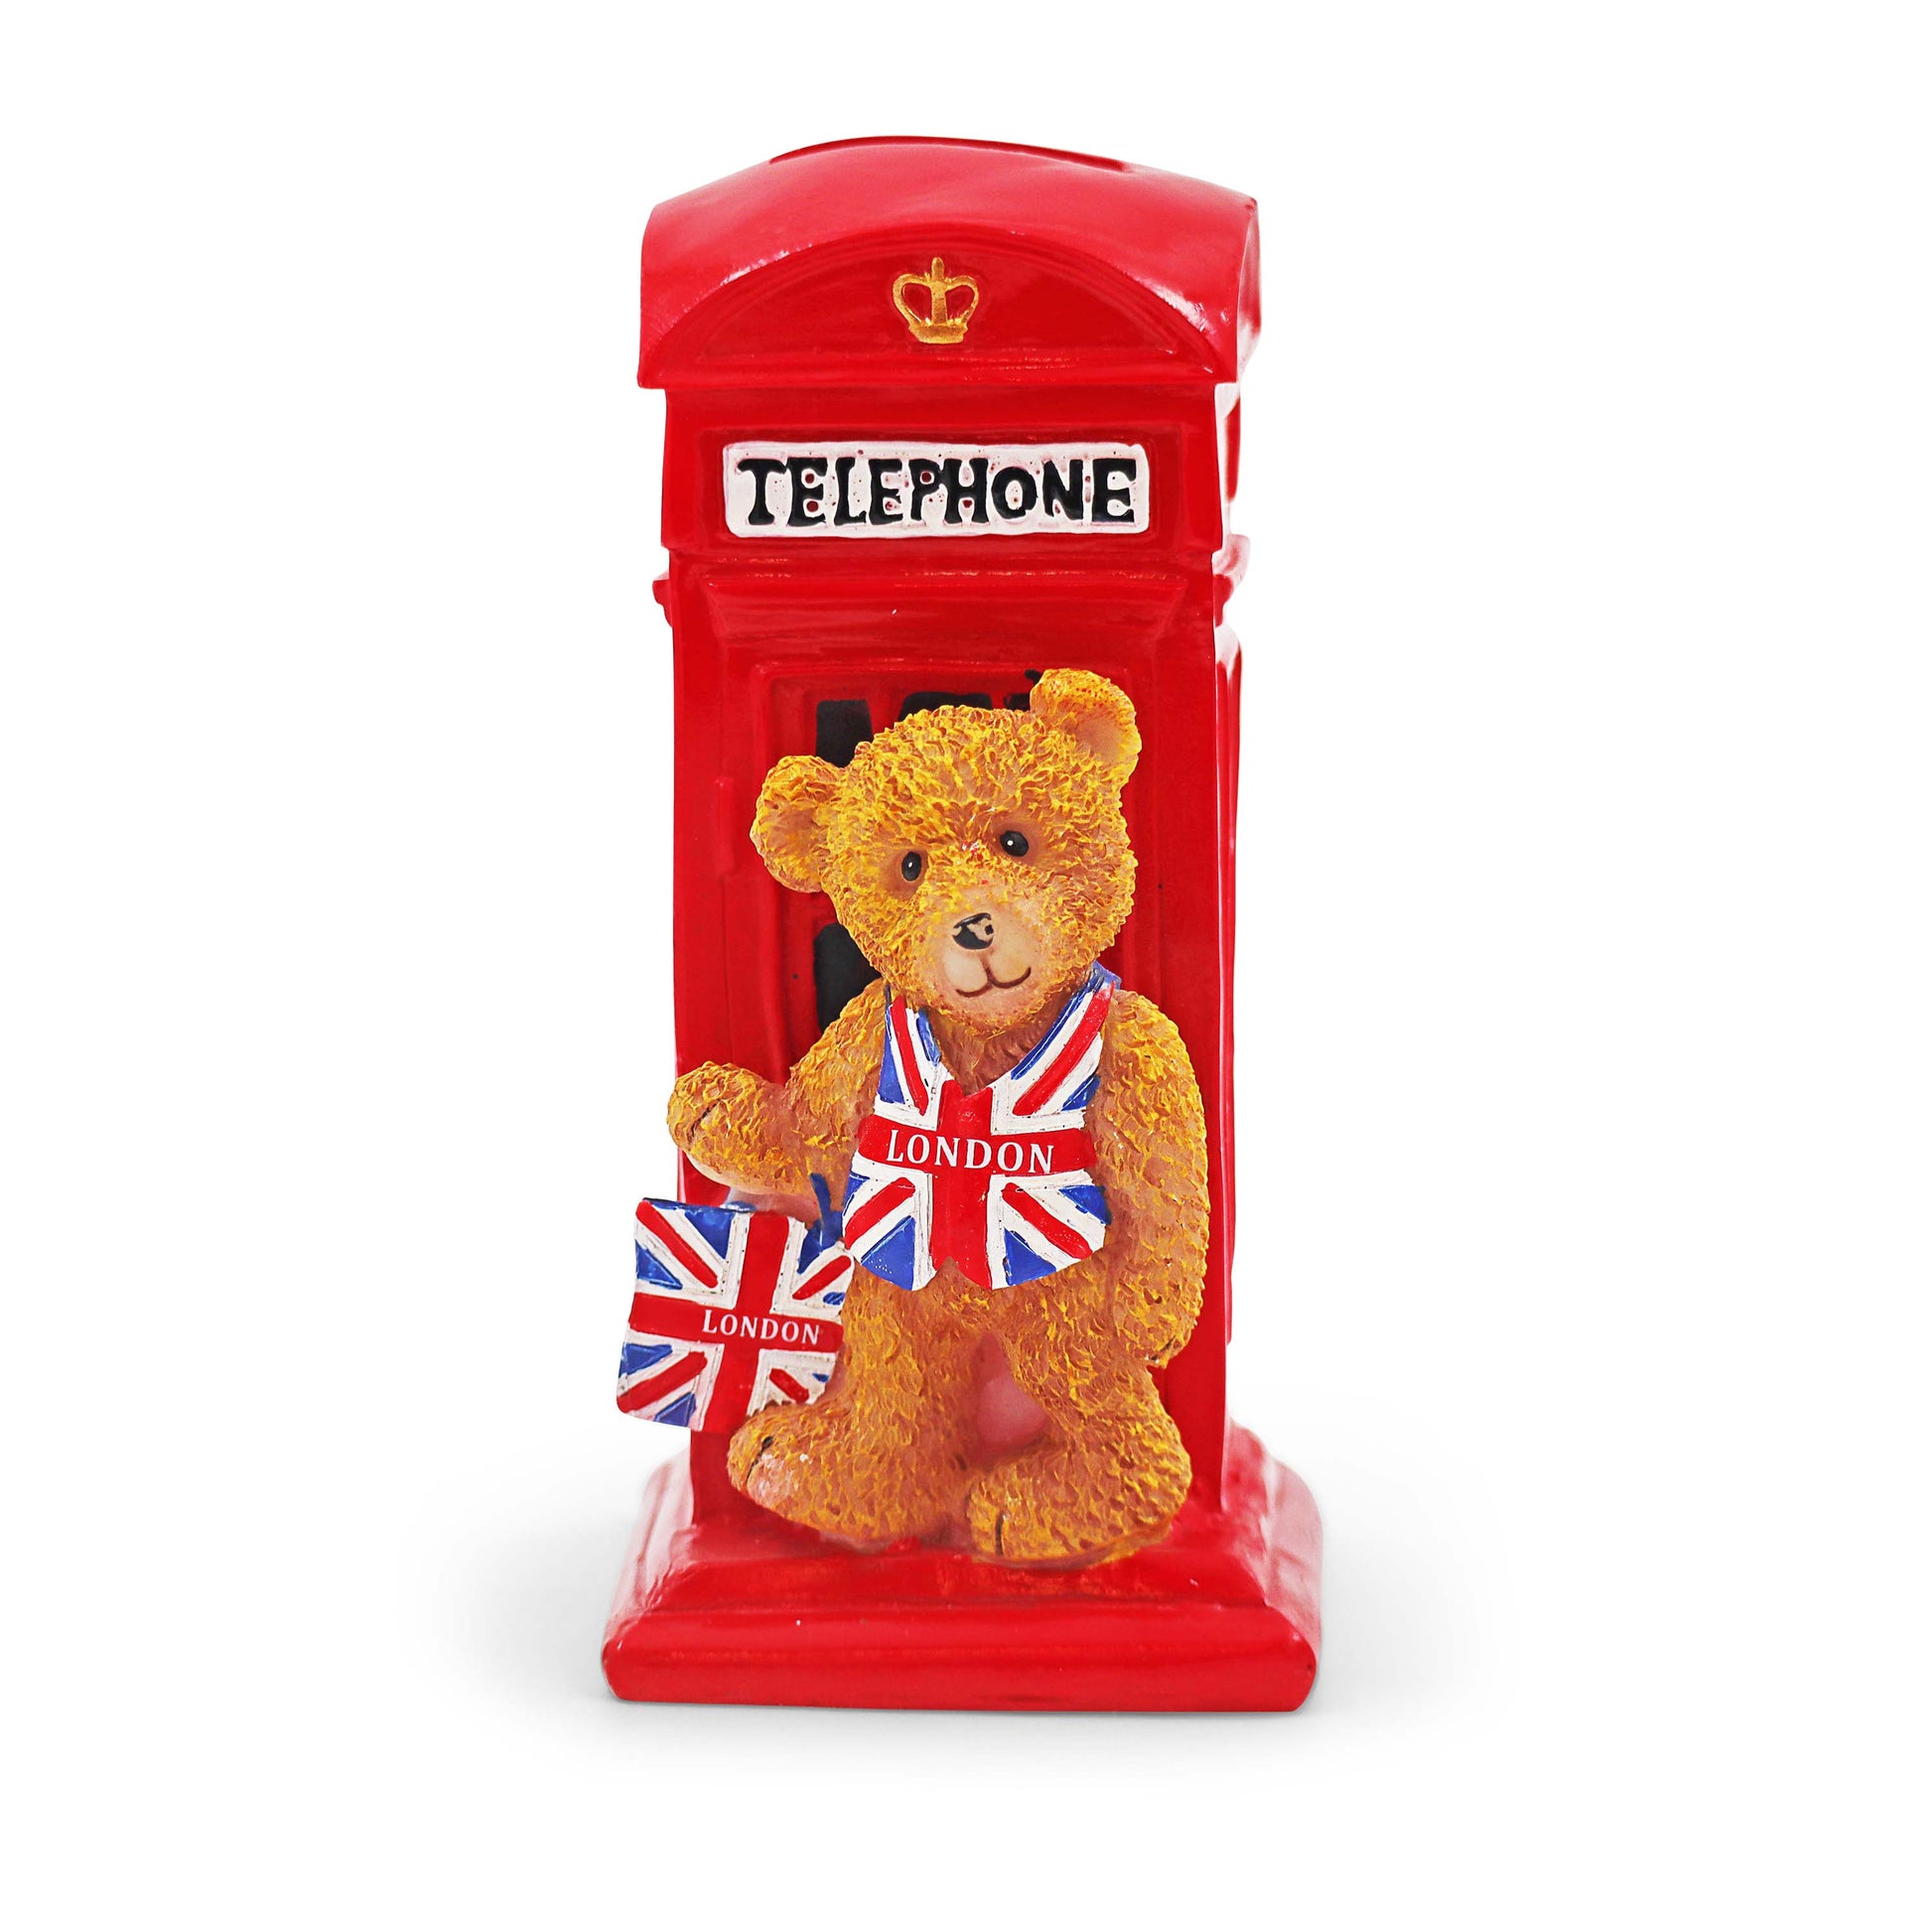 London souvenir teddy bear money bank